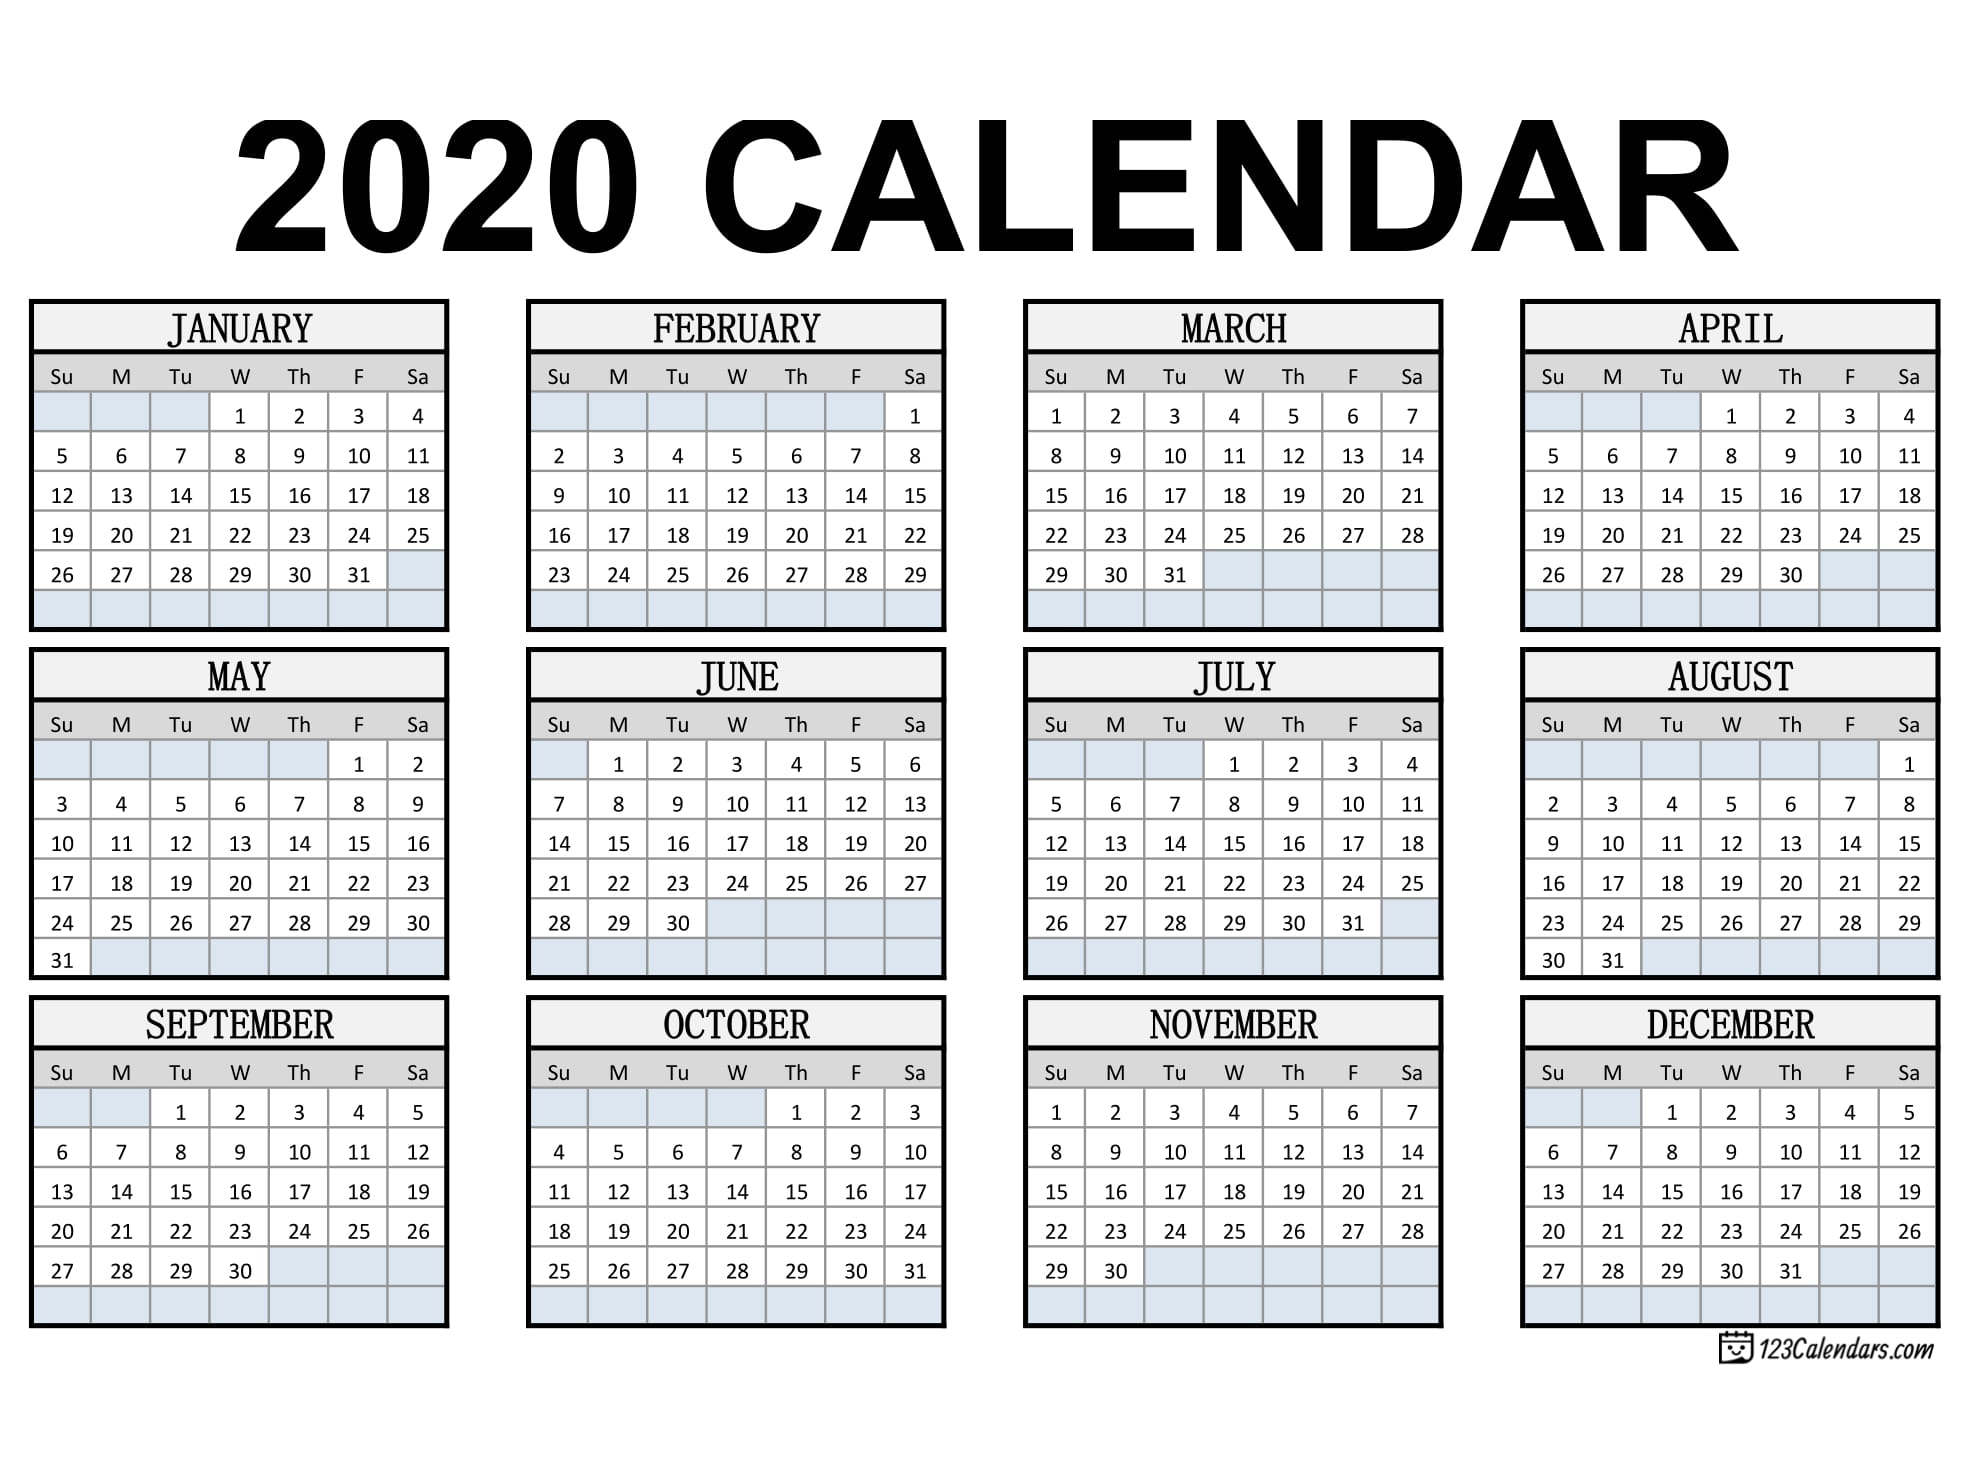 2020 Calendar Year